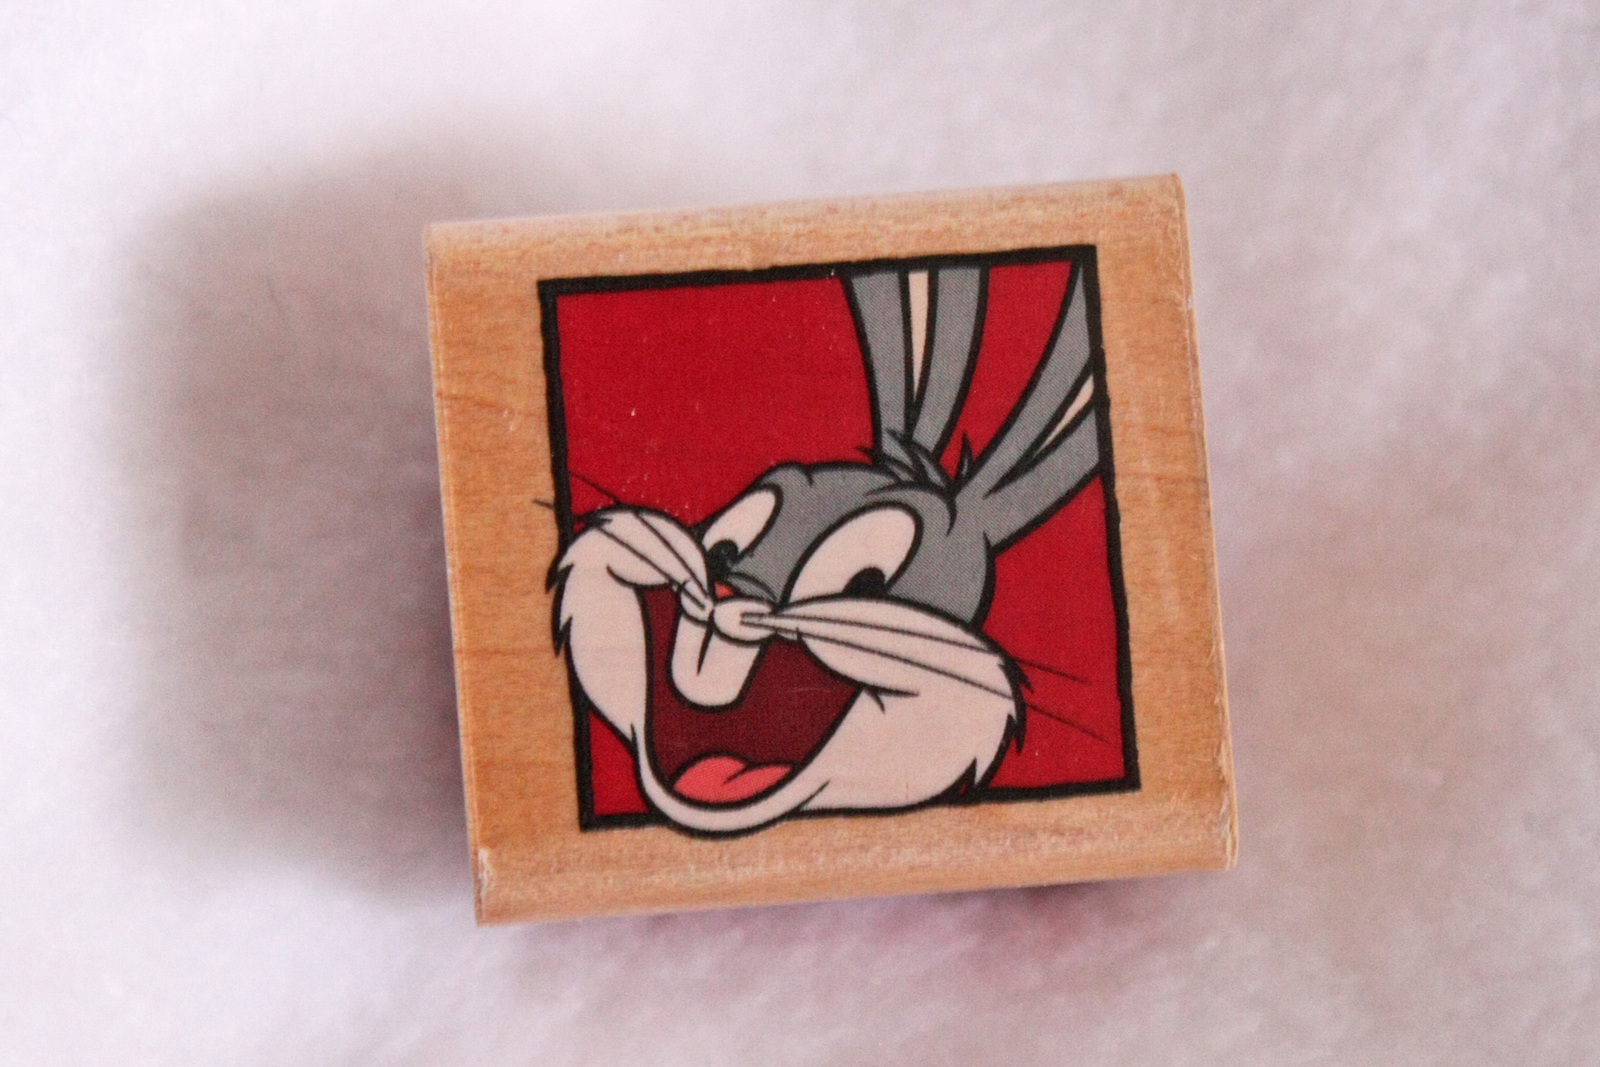 Bugs Bunny Rubber Stampede Mounted Rubber Stamp 457-C 1993 Warner Bros - $7.99